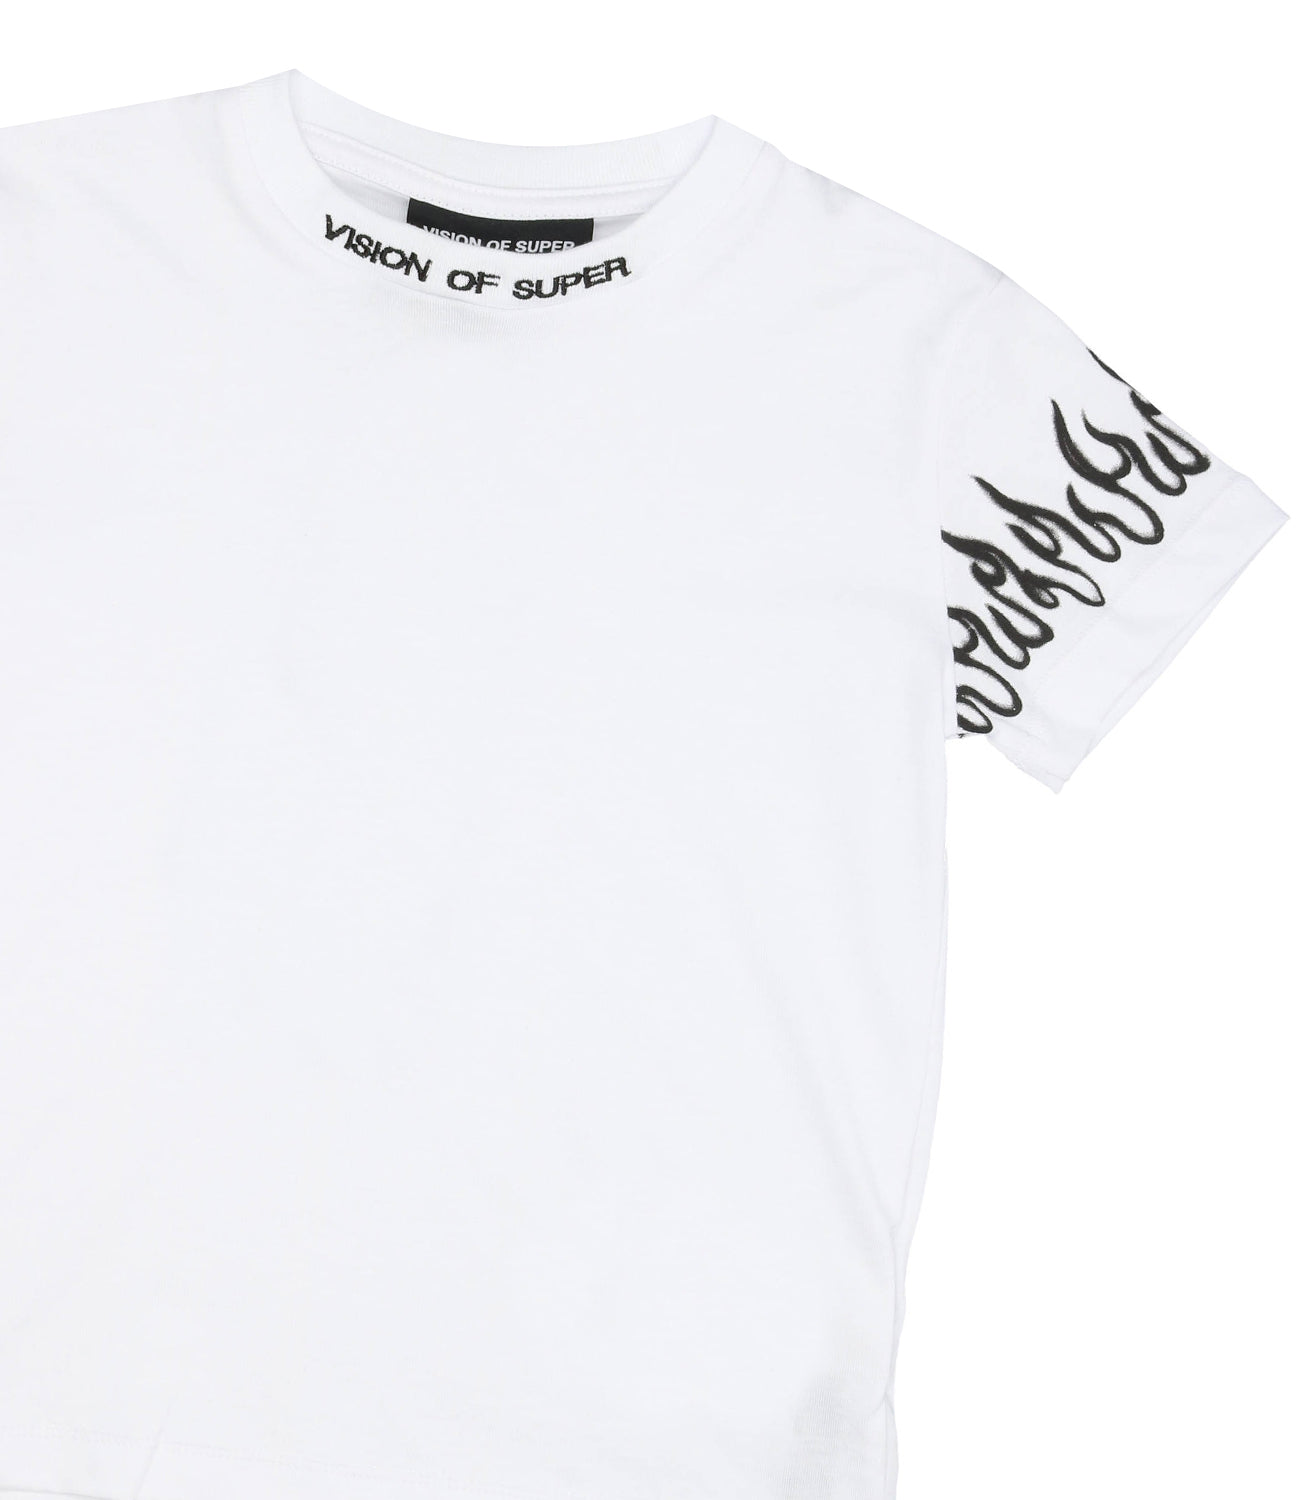 Vision of Super Kids | Spray Frames T-Shirt White and Black